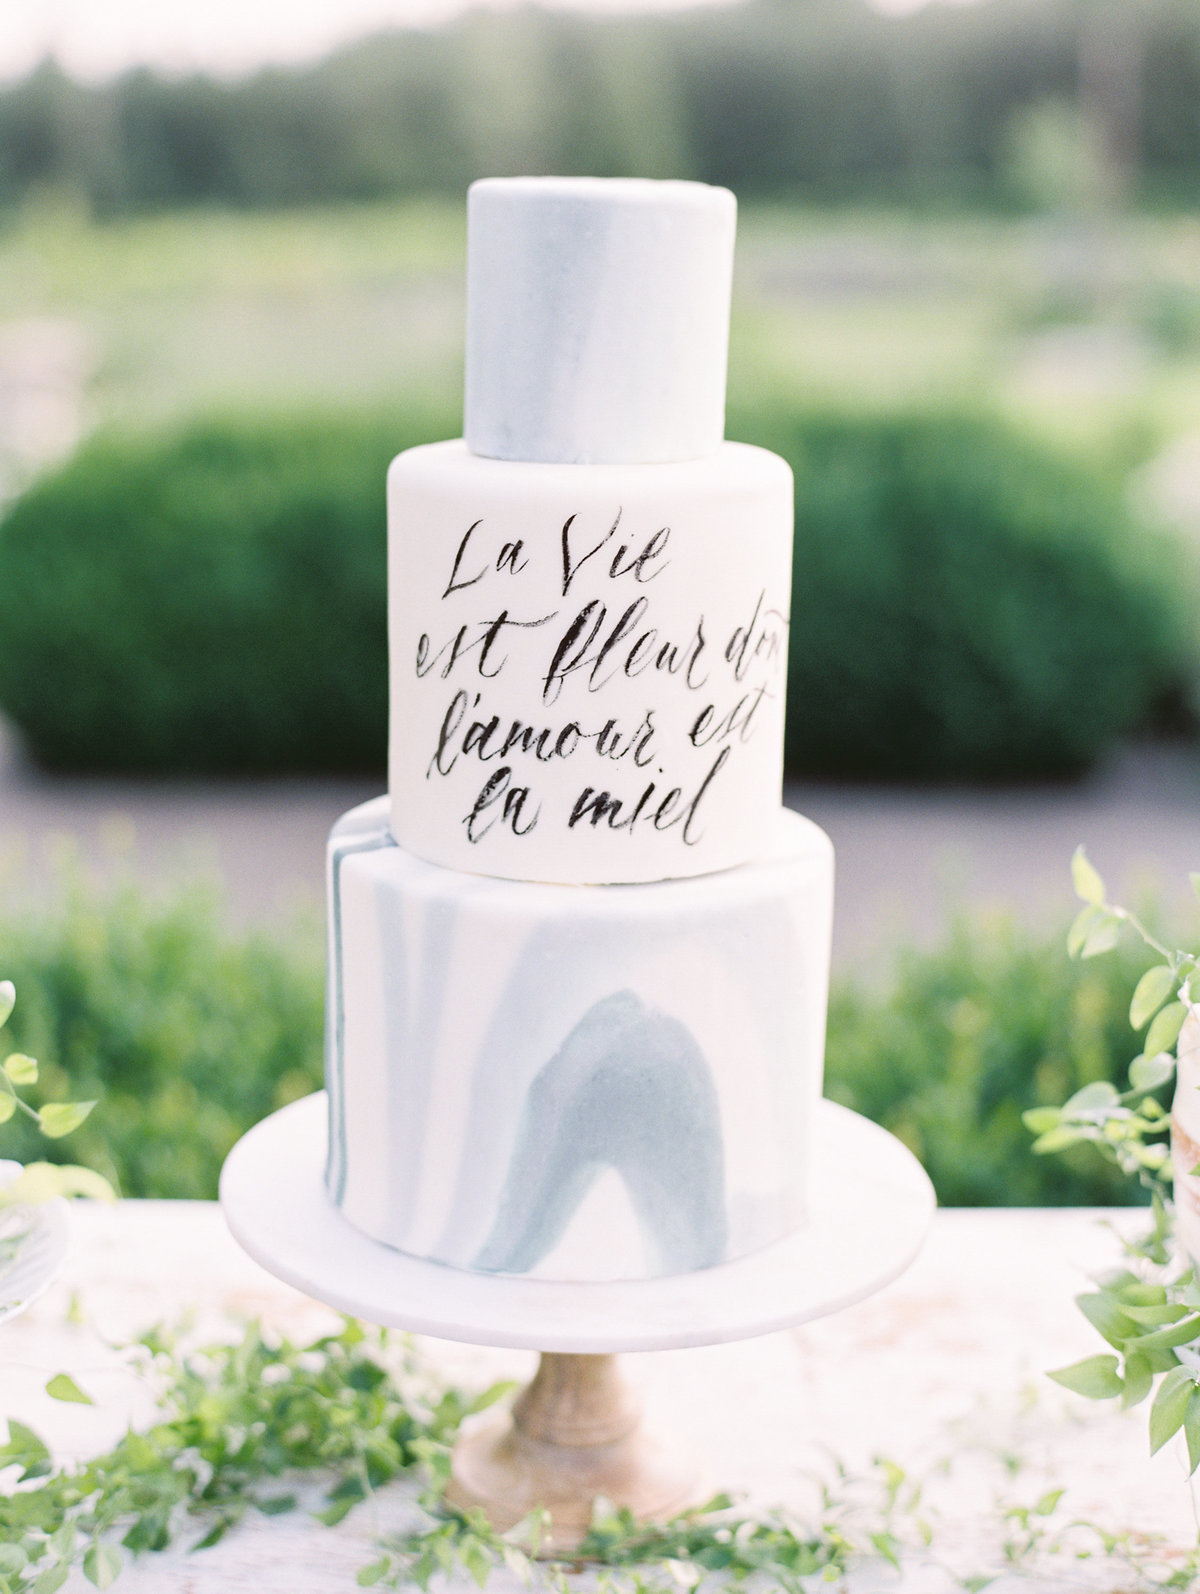 marble wedding cake with custom calligraphy